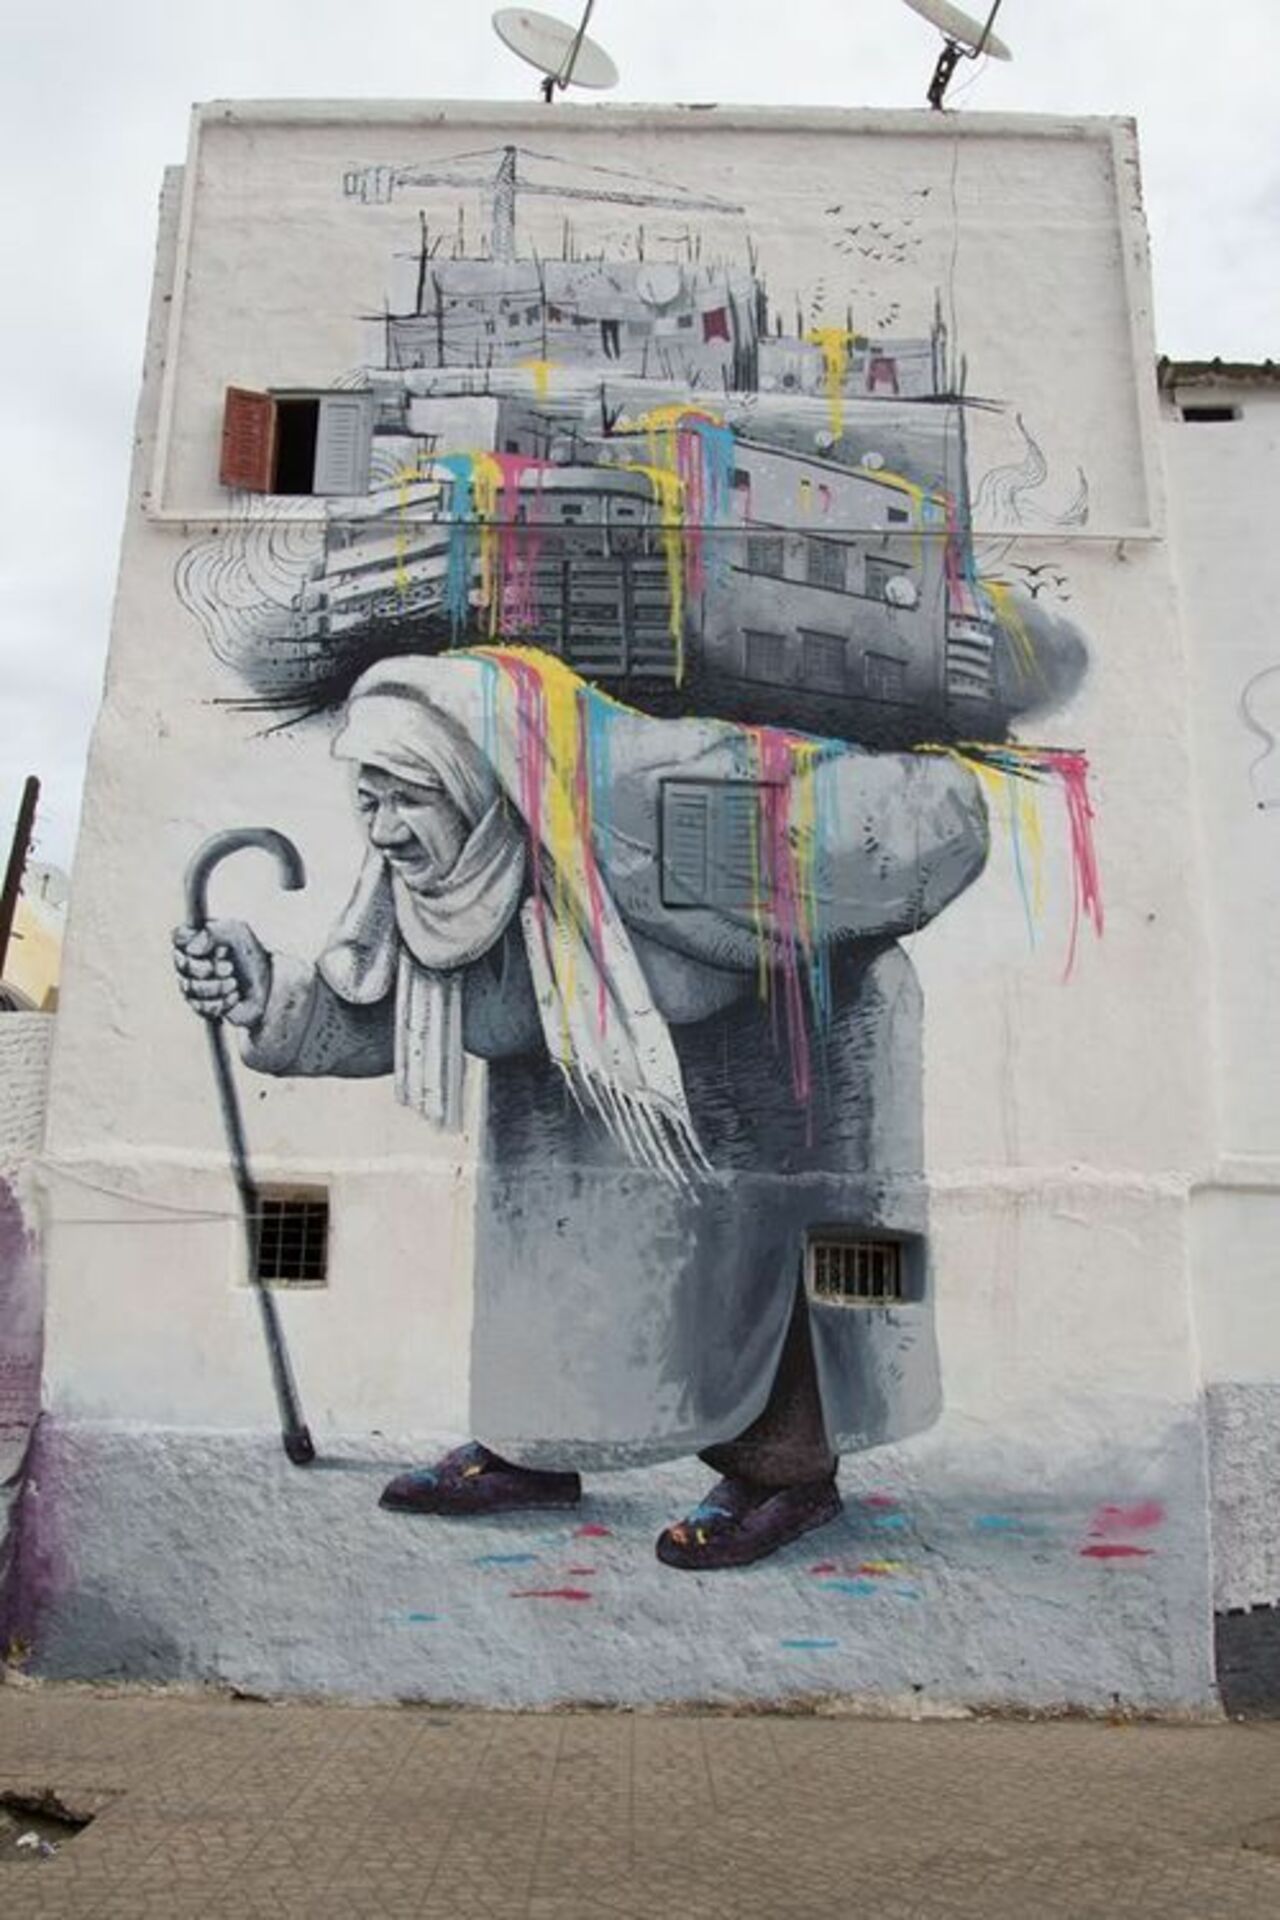 Unknown - Casablanca, Morocco#streetart #mural #art #graffiti https://t.co/G9UMZevHfm